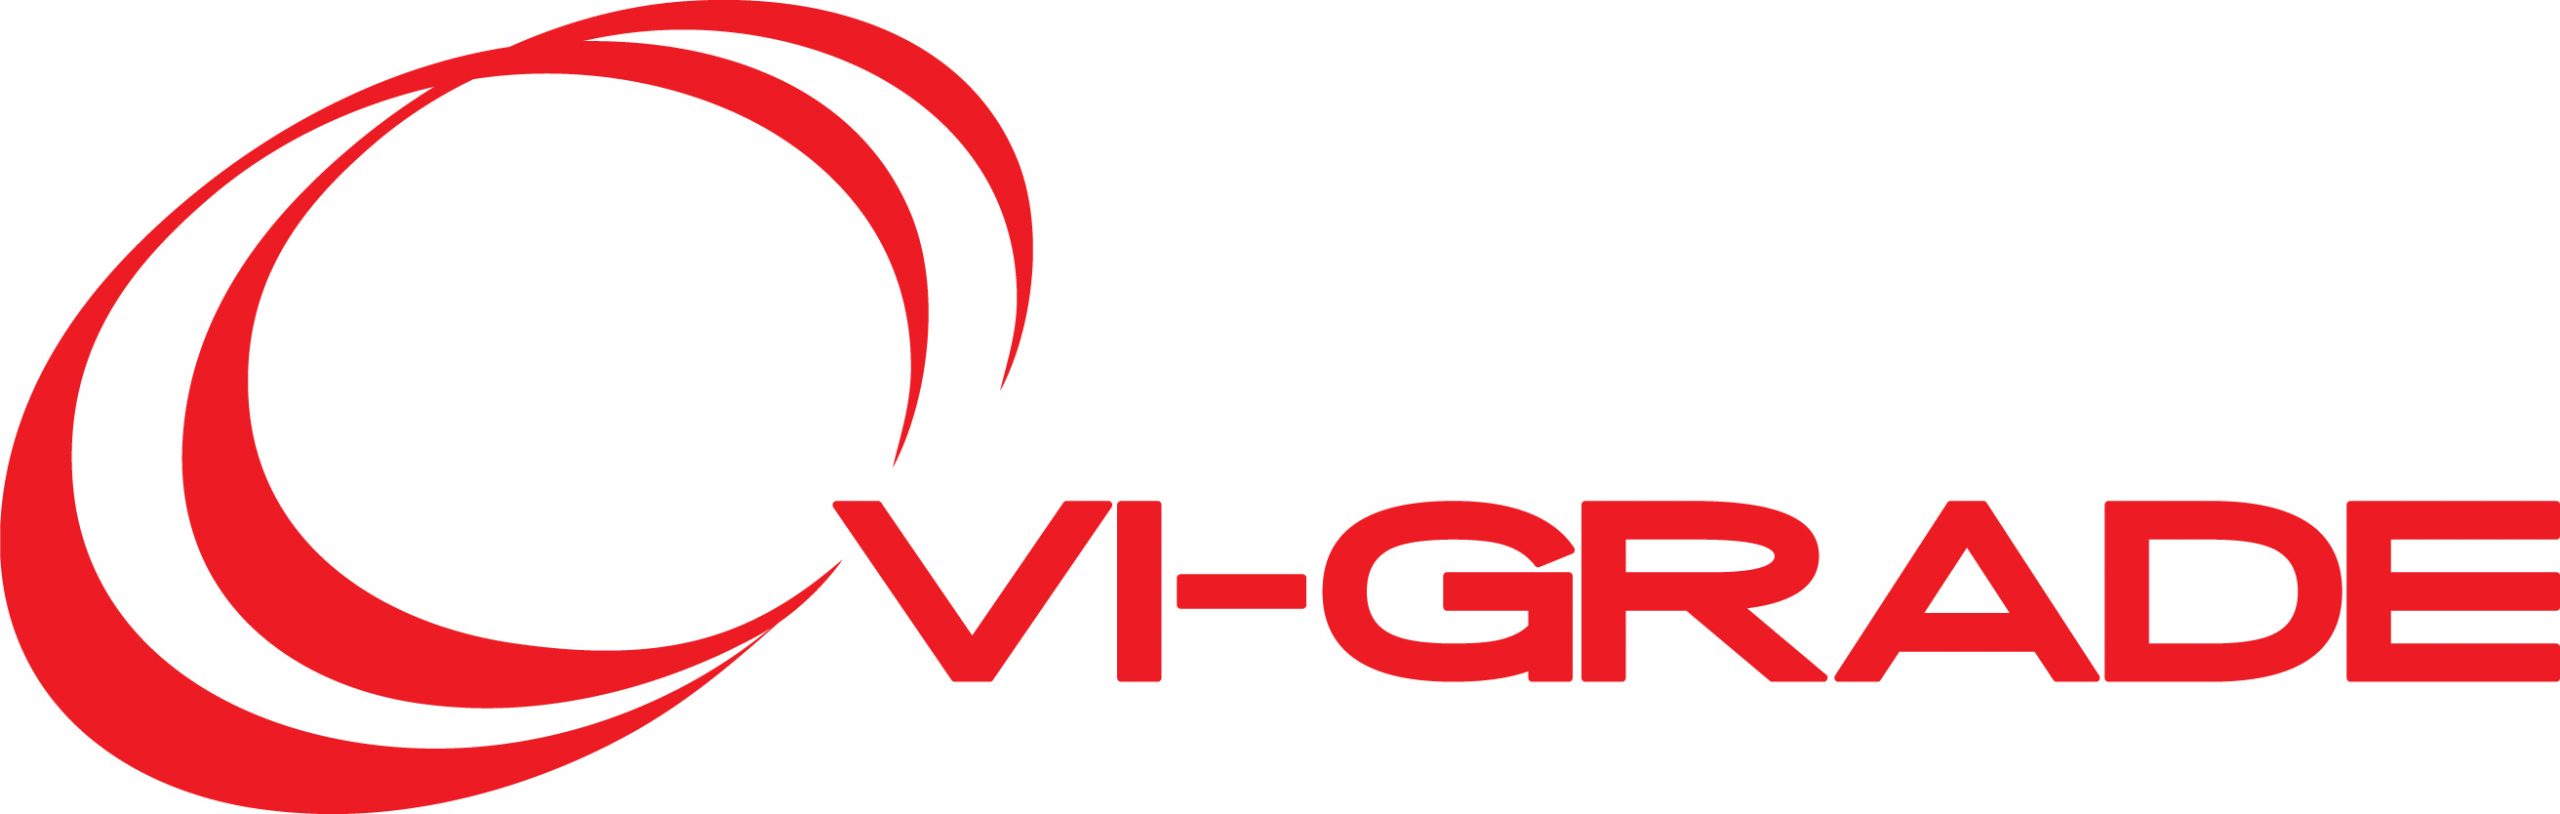 vi-grade Logo